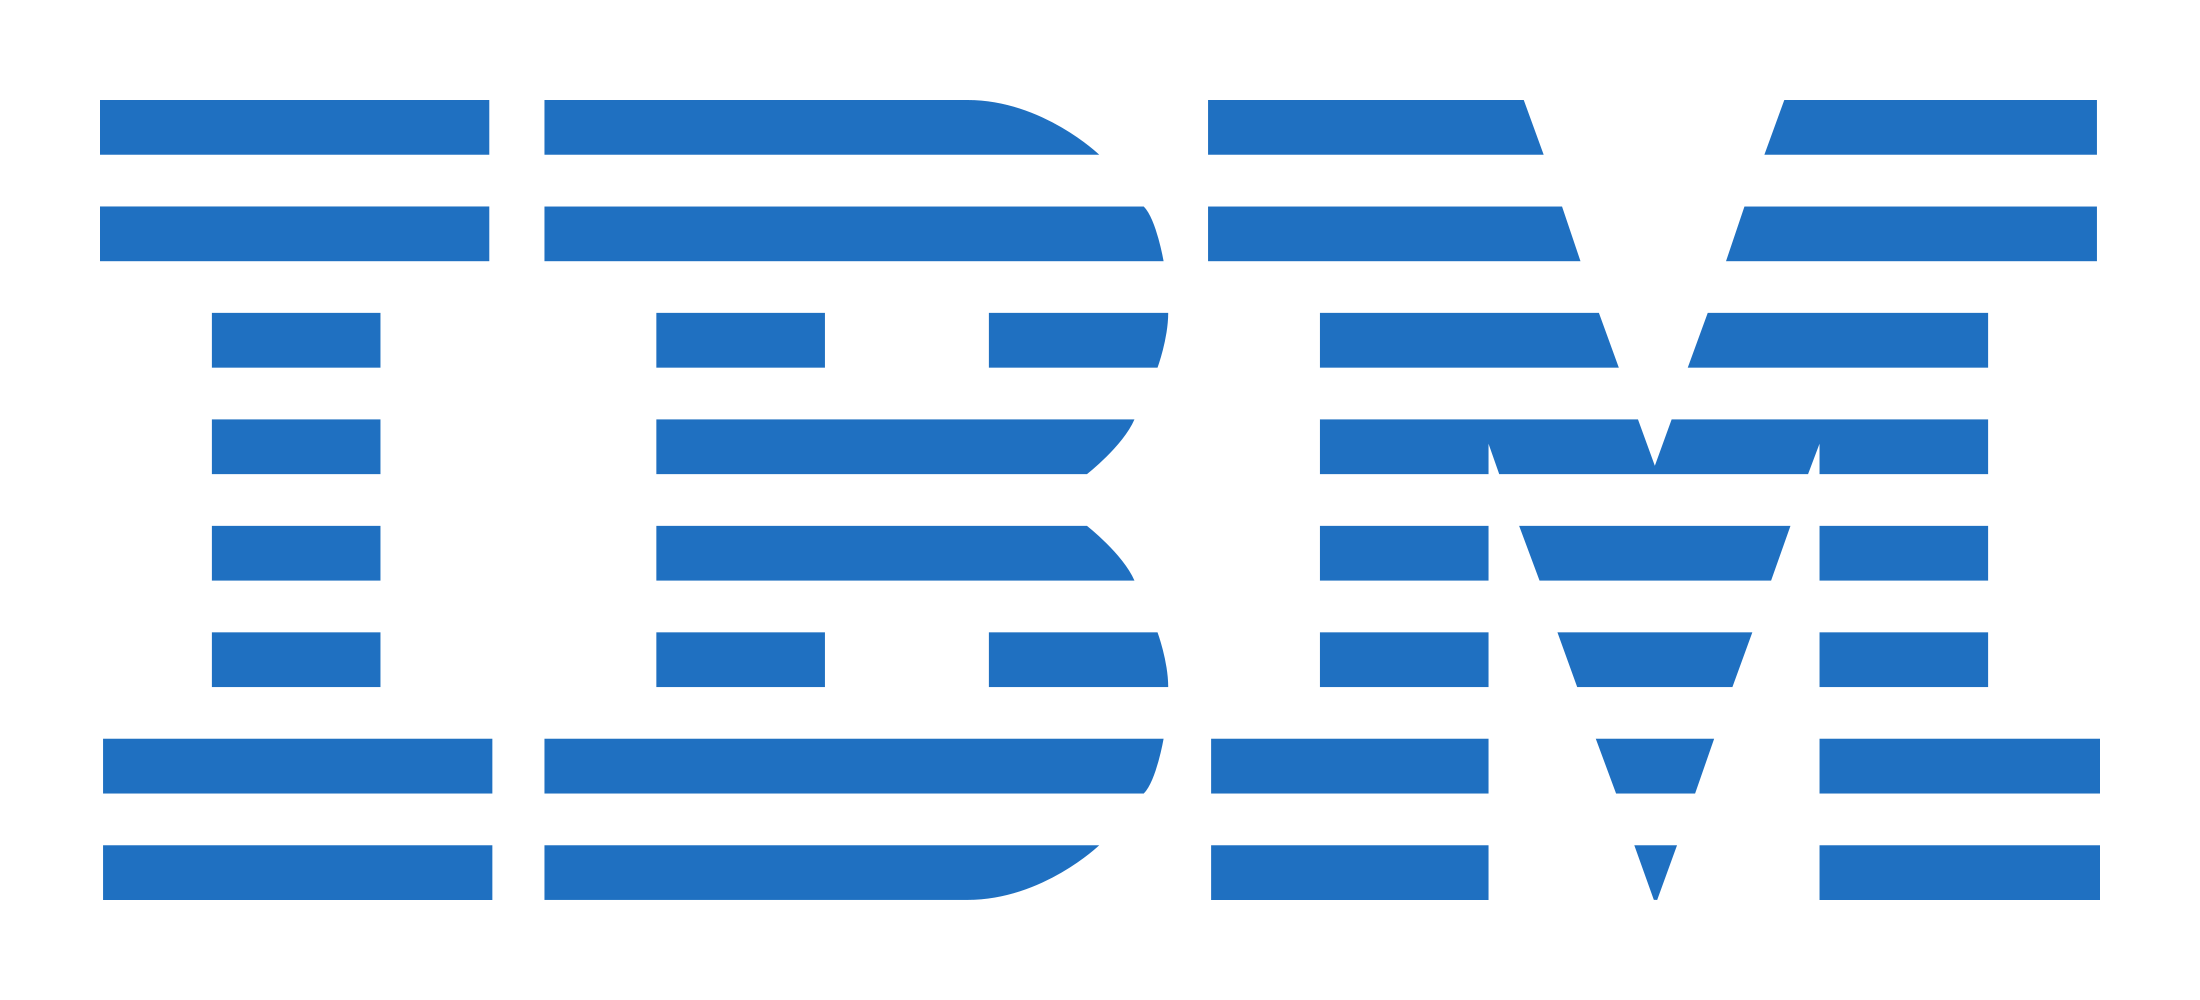 IBM Course